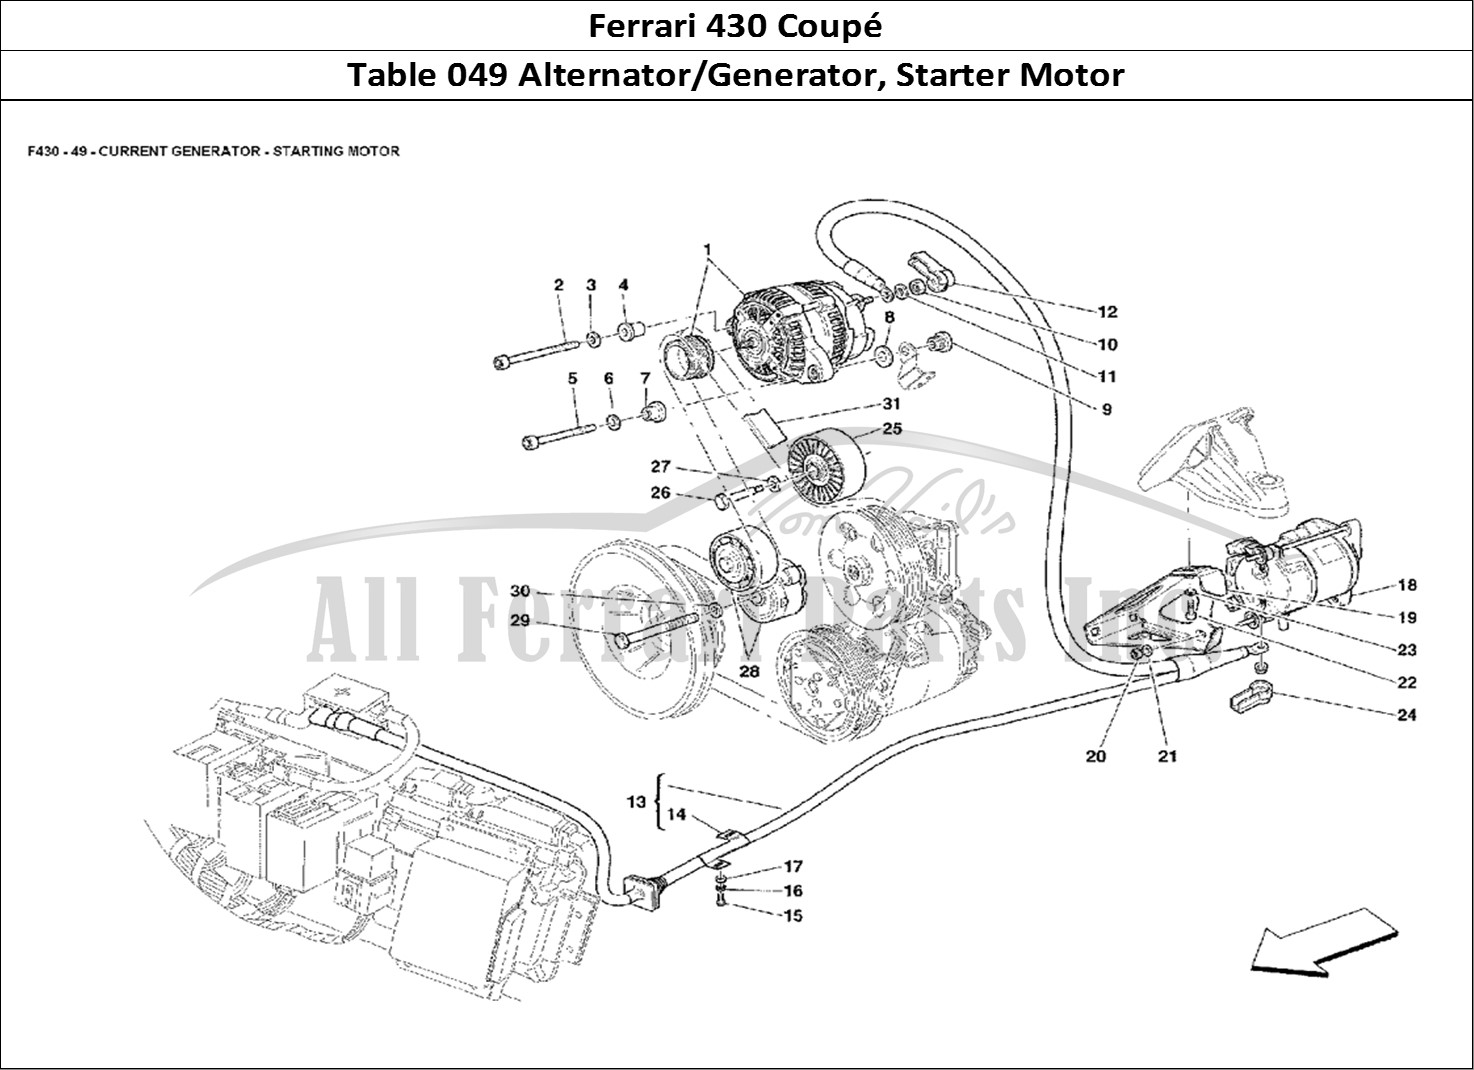 Ferrari Parts Ferrari 430 Coup Page 049 Current Generator - Start